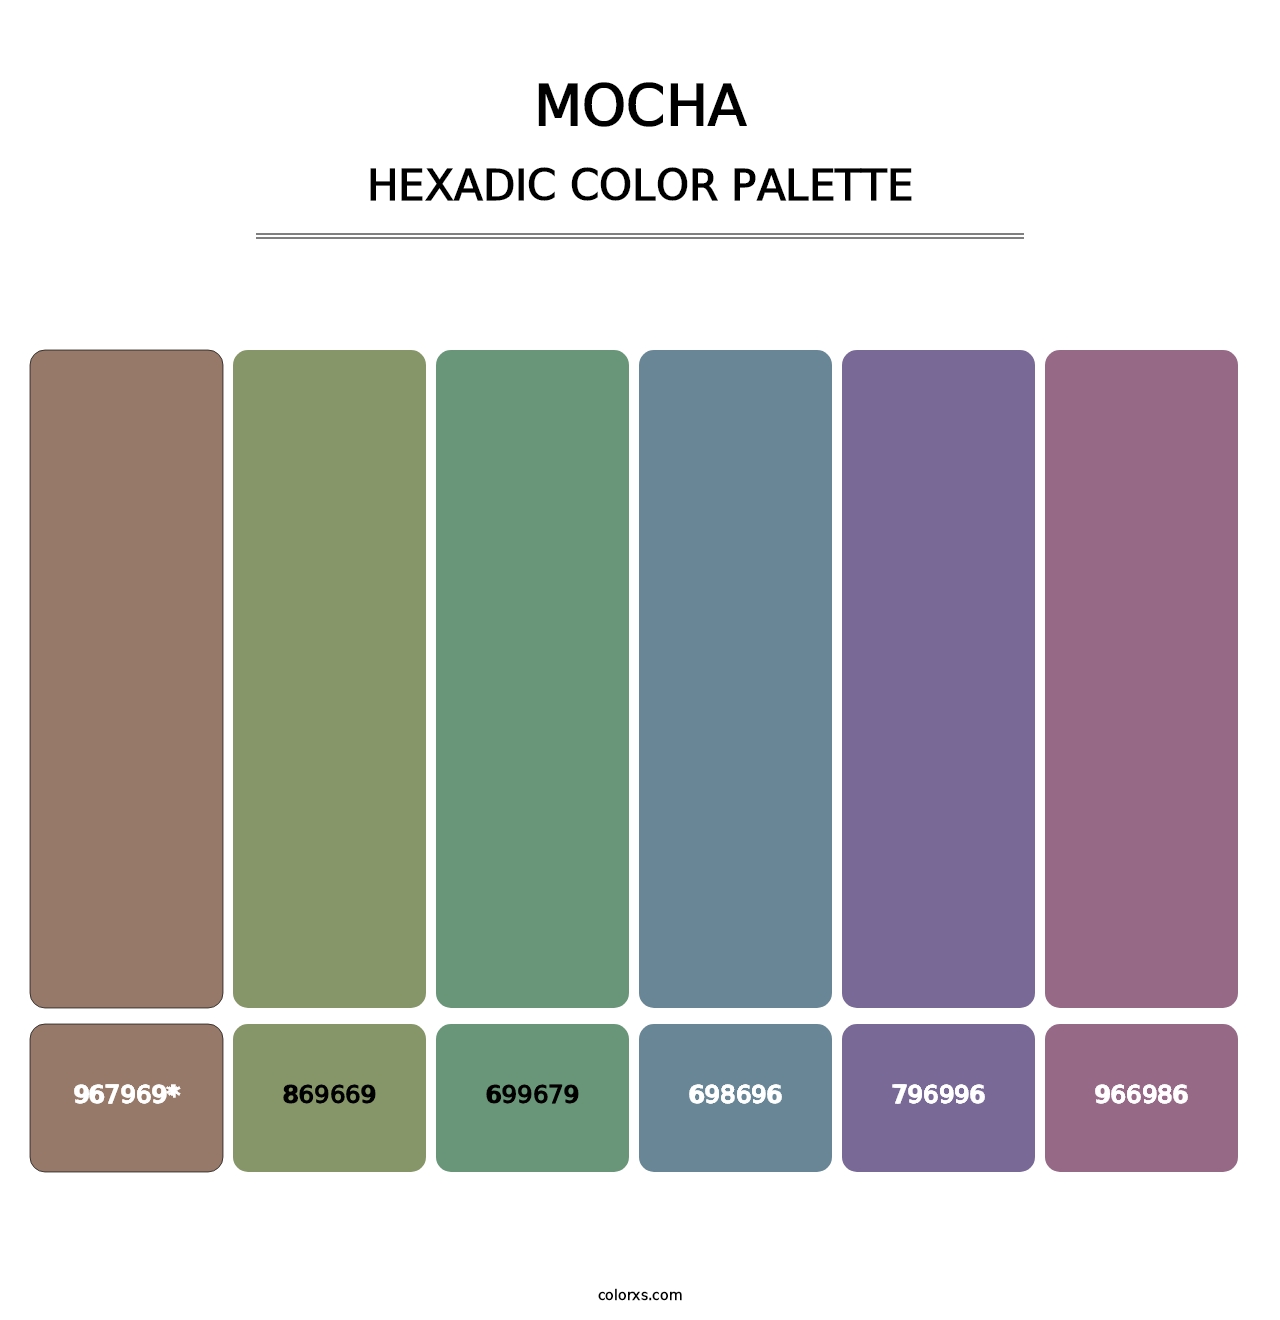 Mocha - Hexadic Color Palette